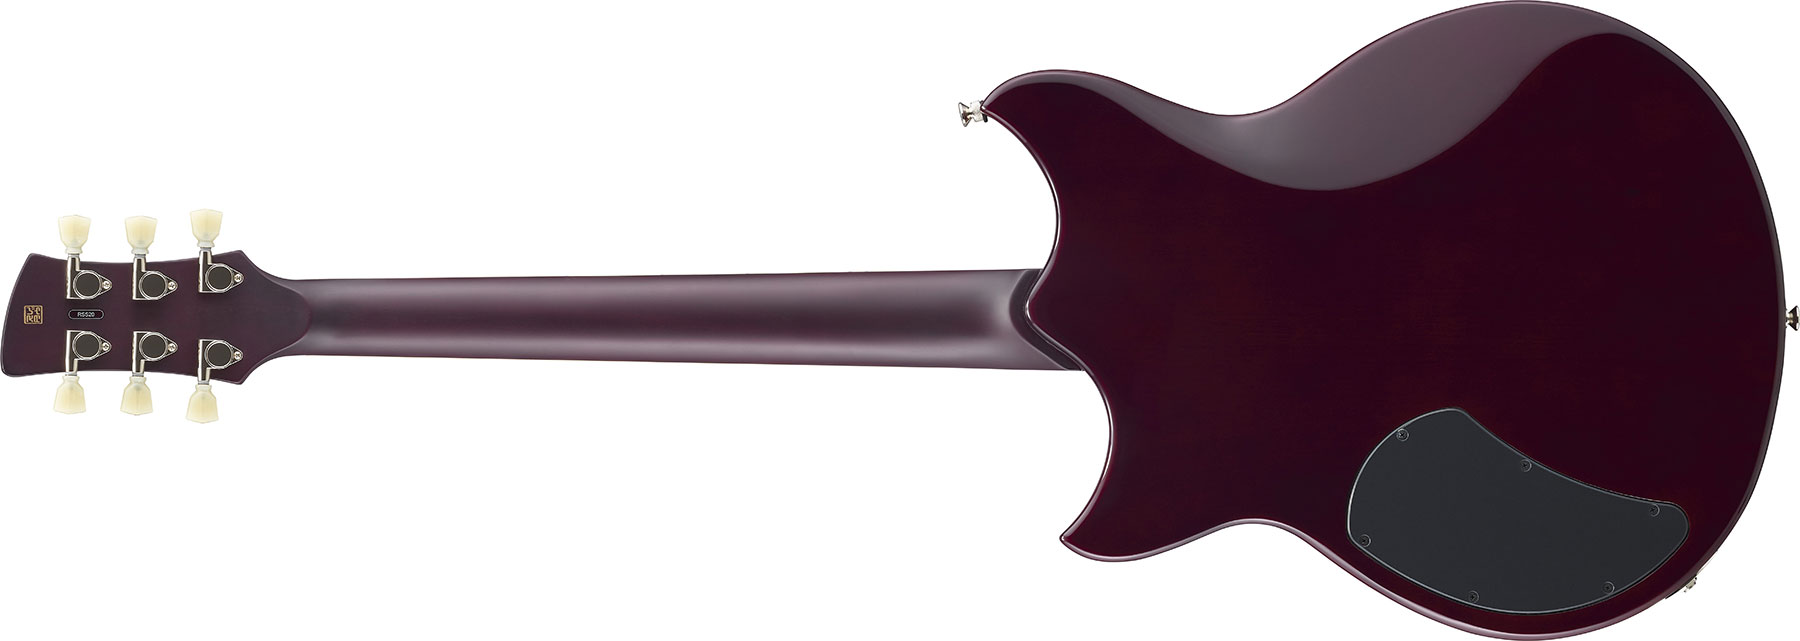 Yamaha Rss20 Revstar Standard Hh Ht Rw - Black - Guitarra eléctrica de doble corte - Variation 2